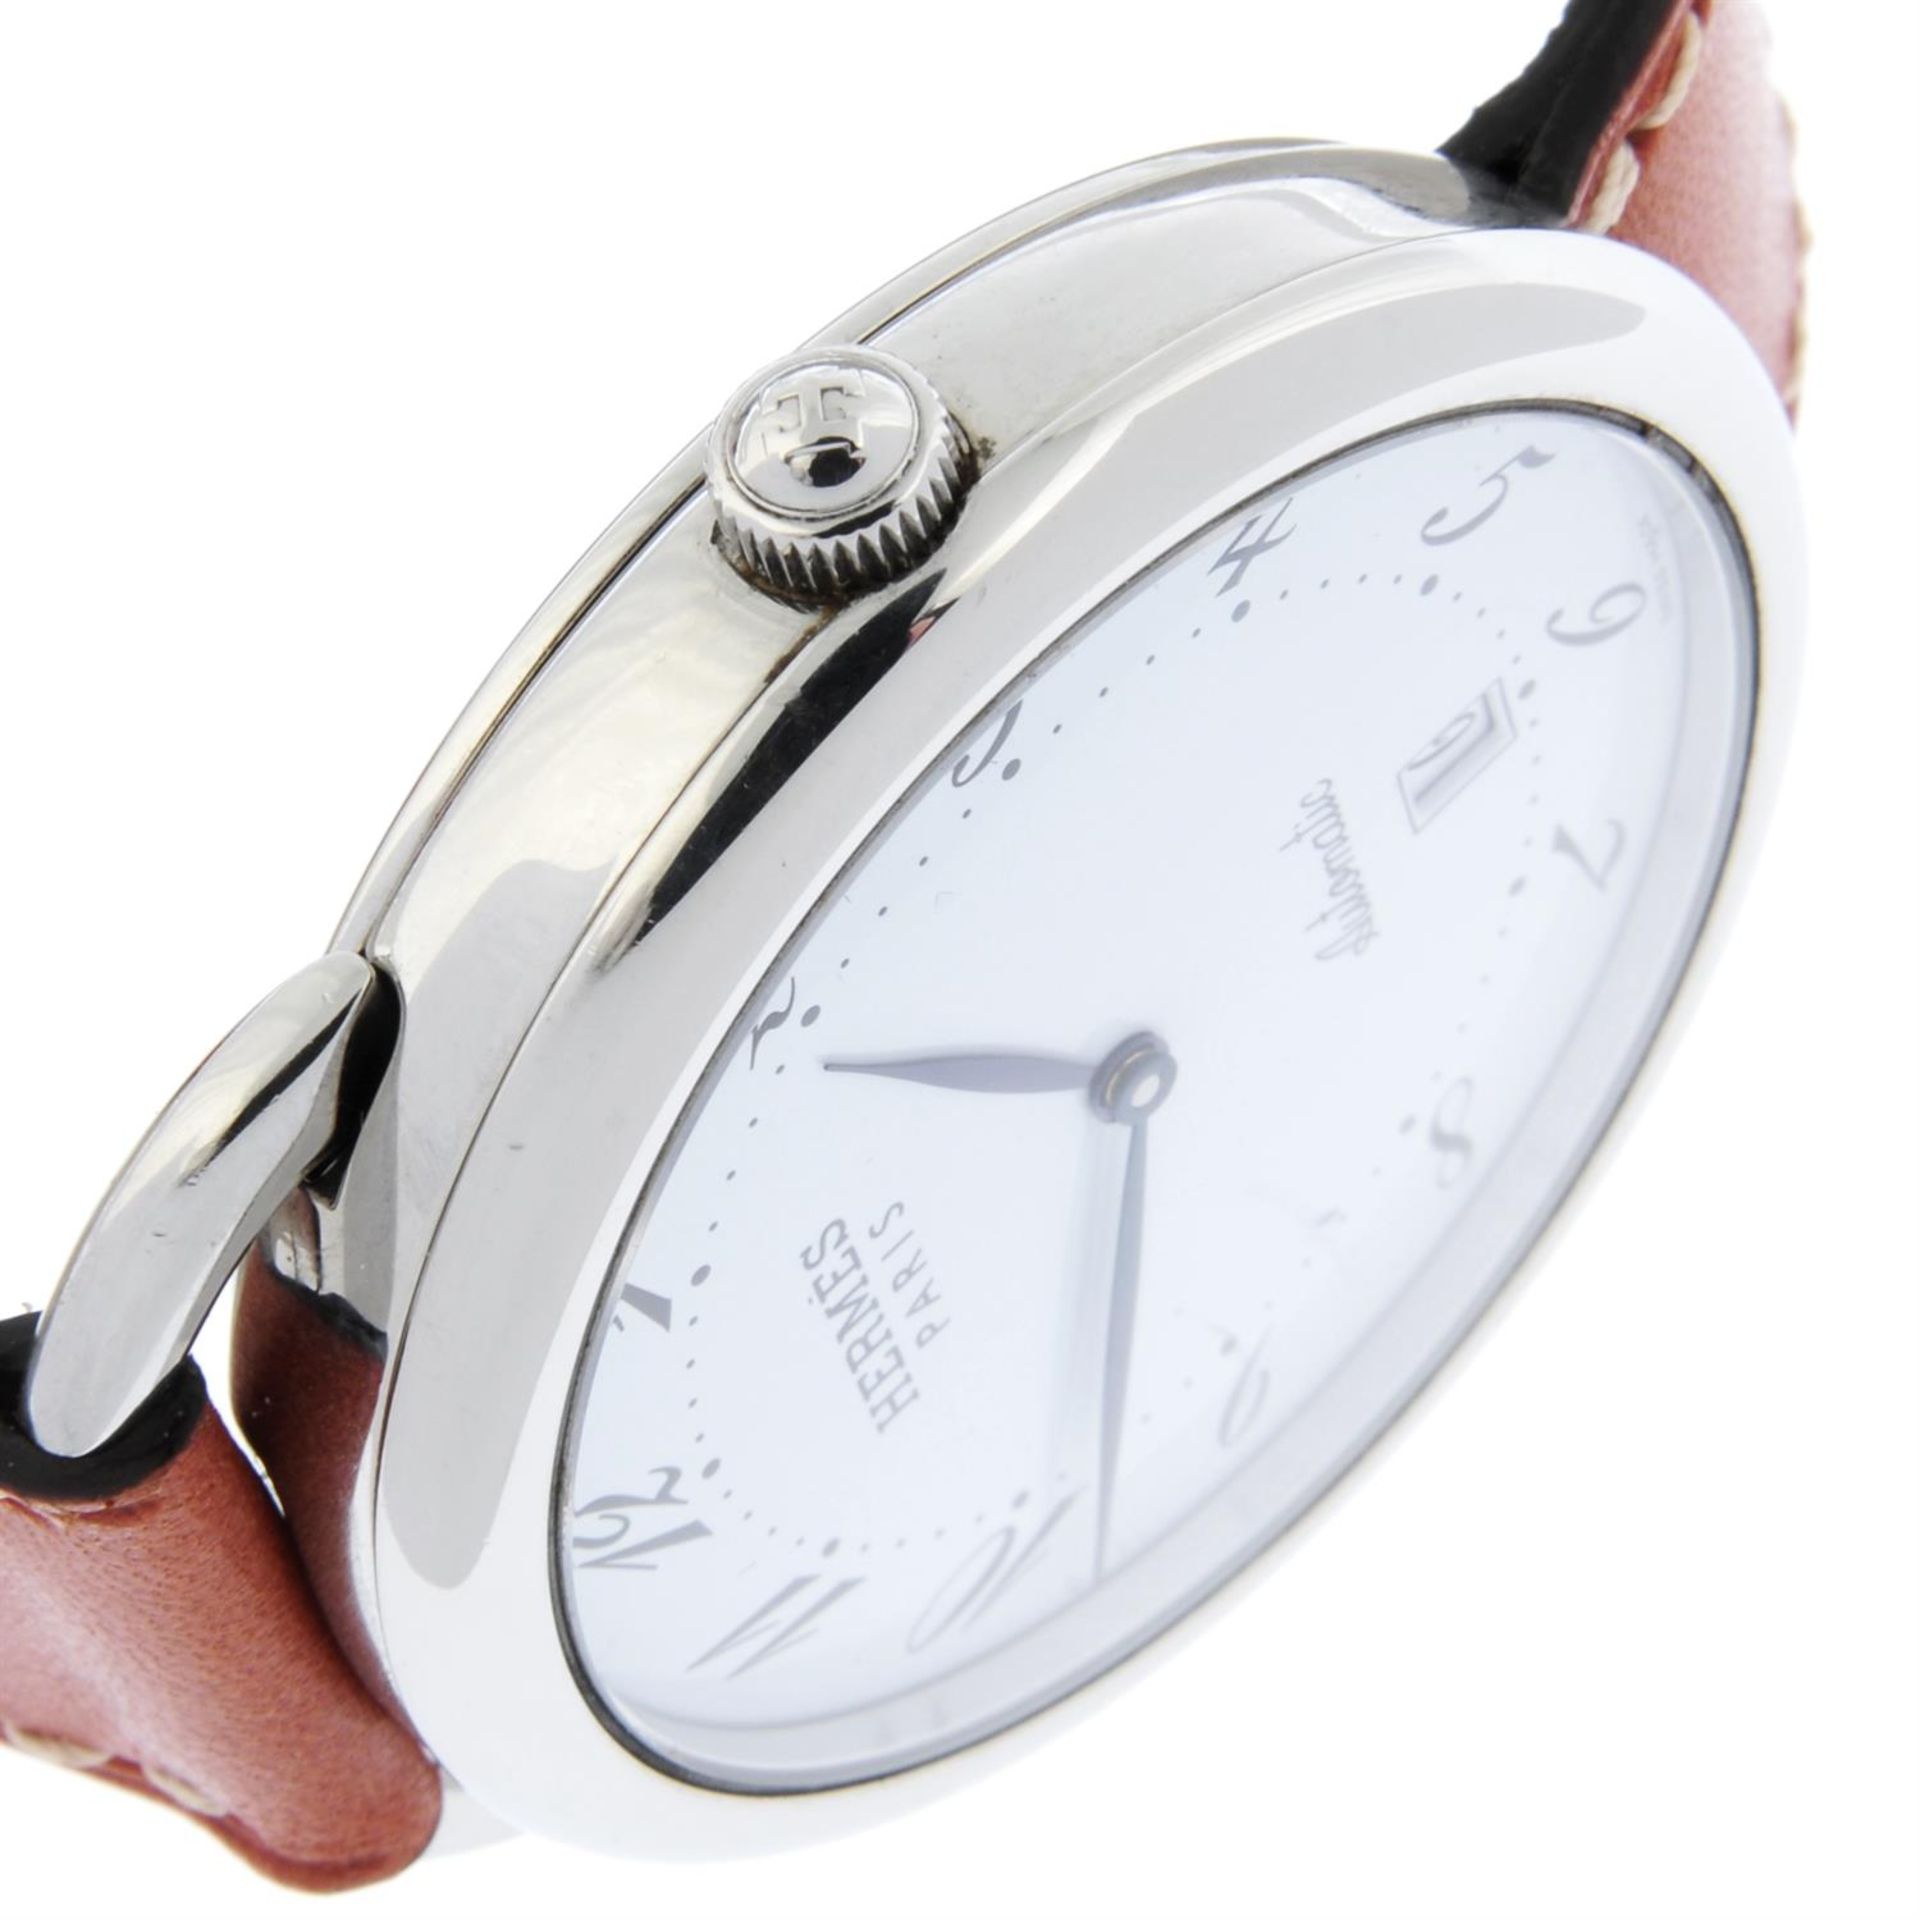 HERMÈS - a stainless steel Arceau wrist watch, 41mm. - Image 3 of 7